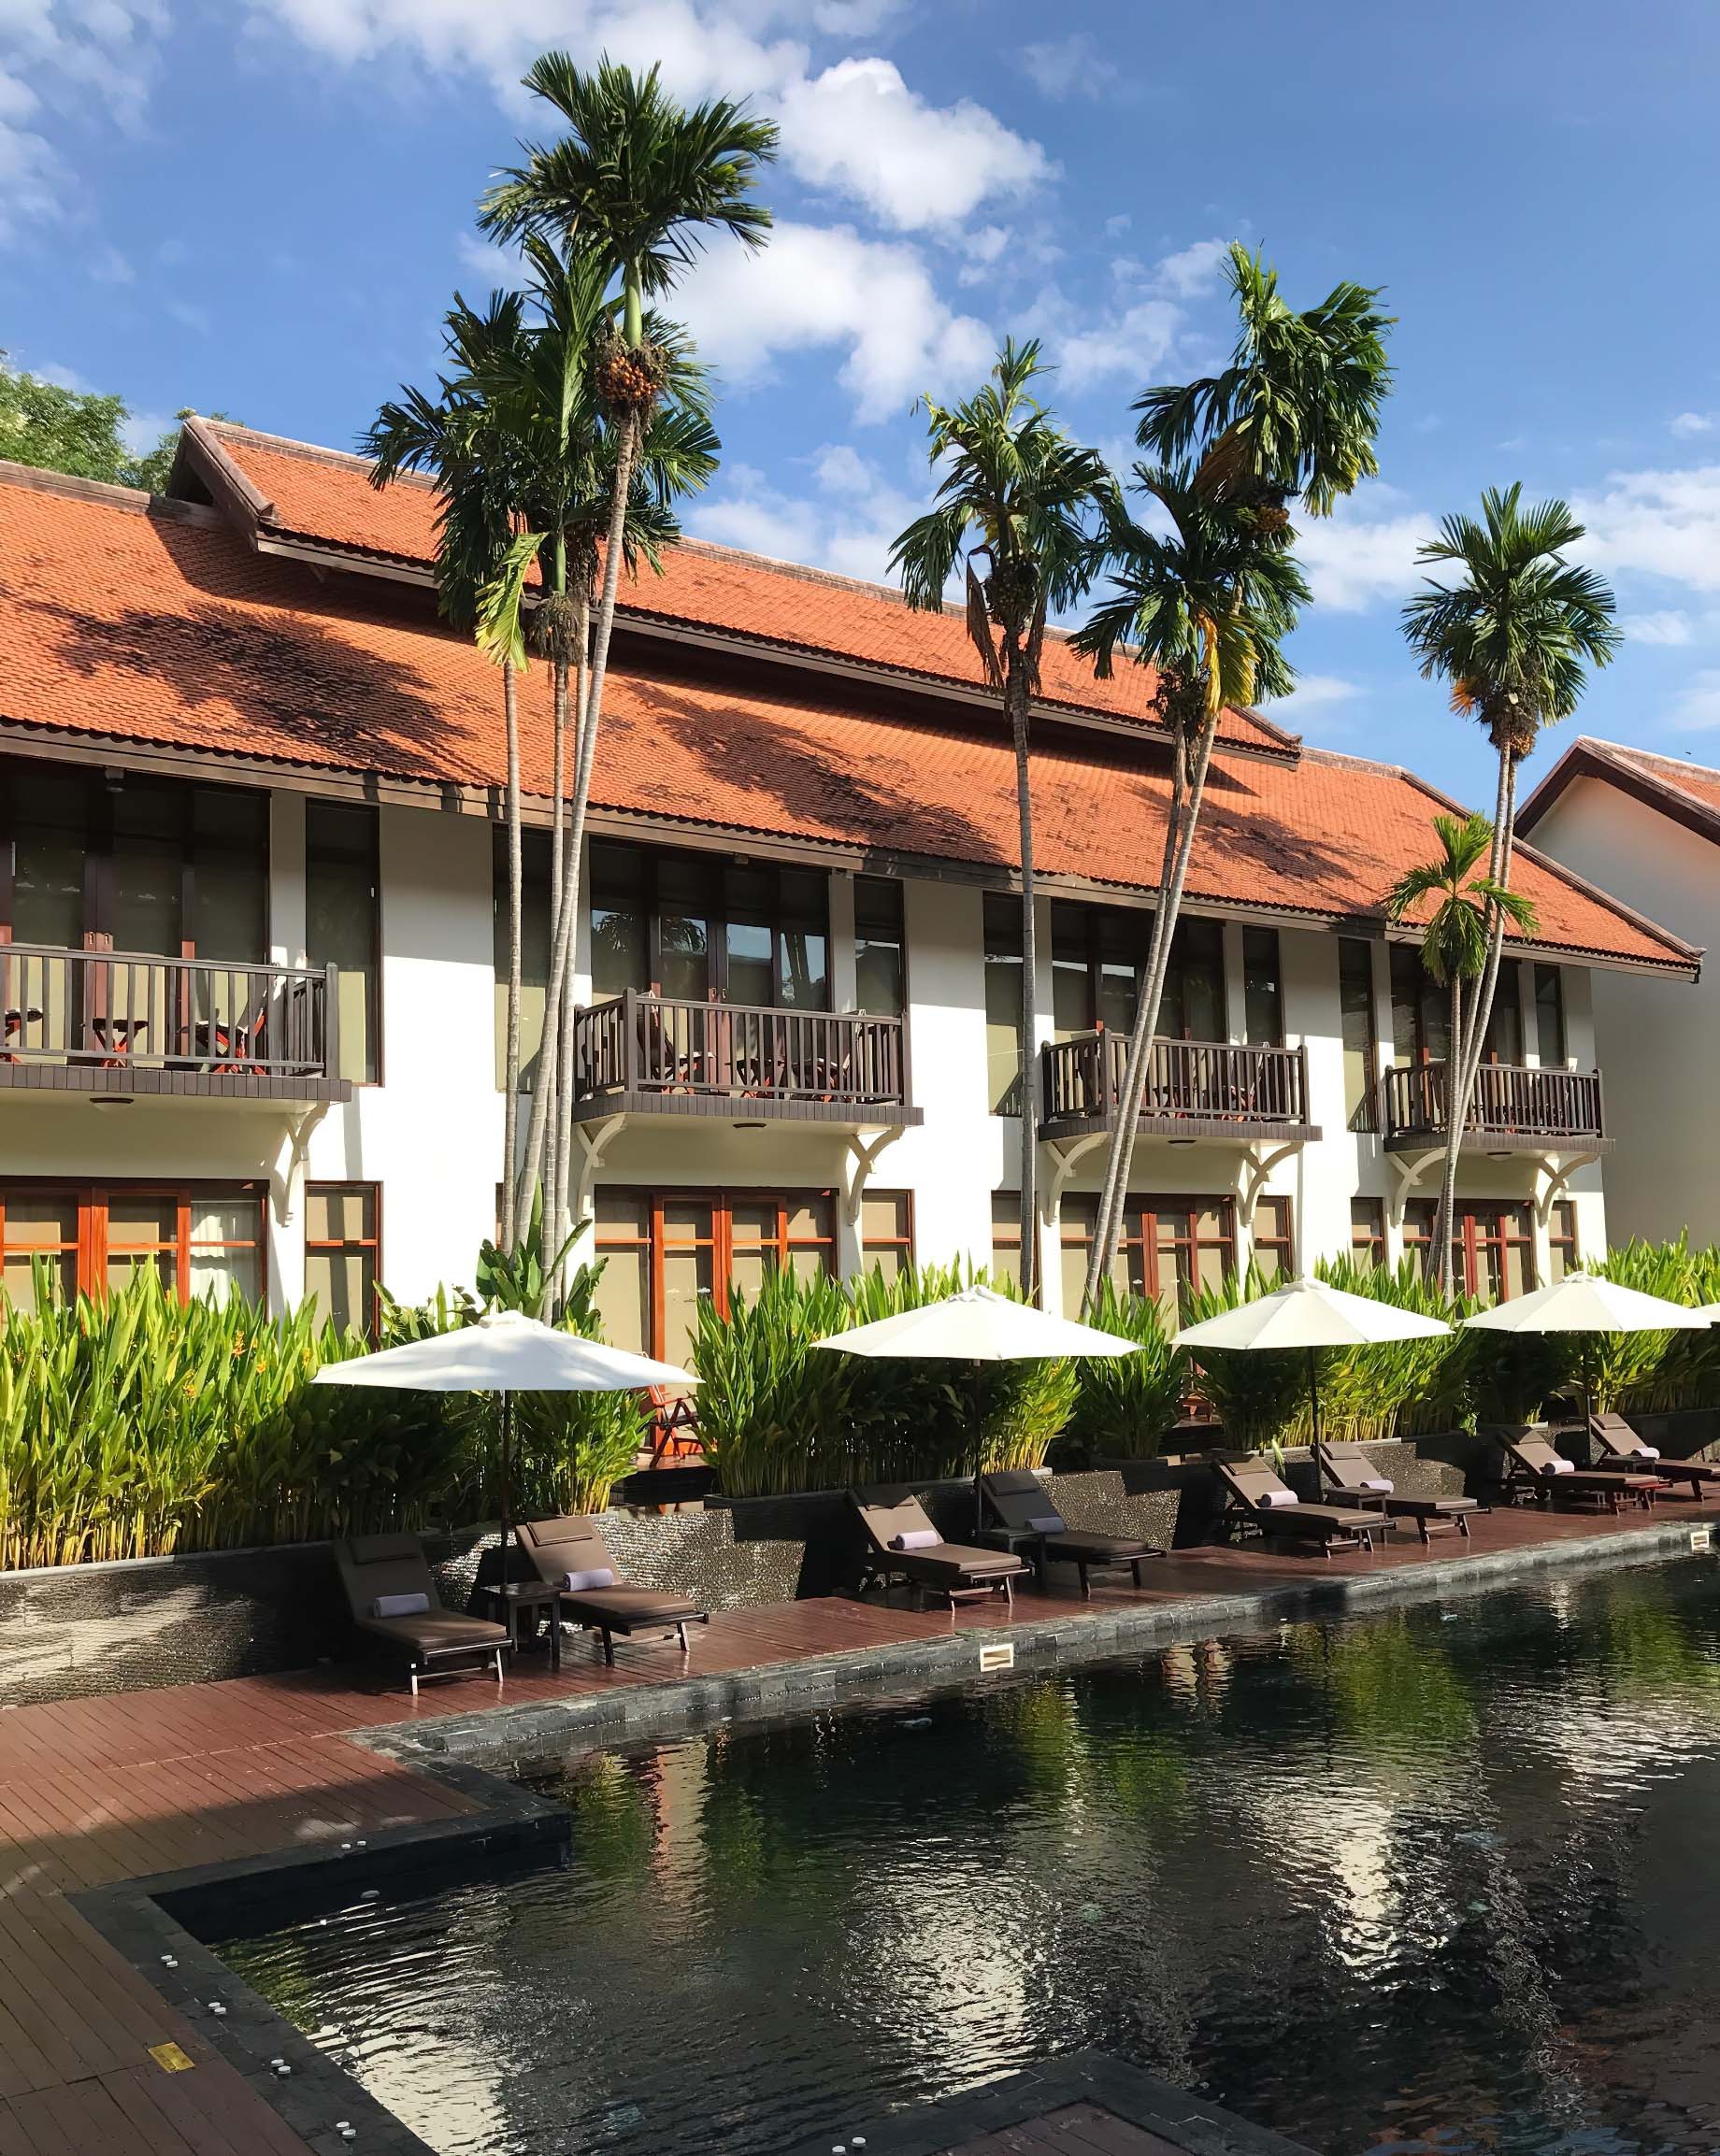 Anantara Angkor Resort – Siem Reap, Cambodia – Outdoor Pool Deck